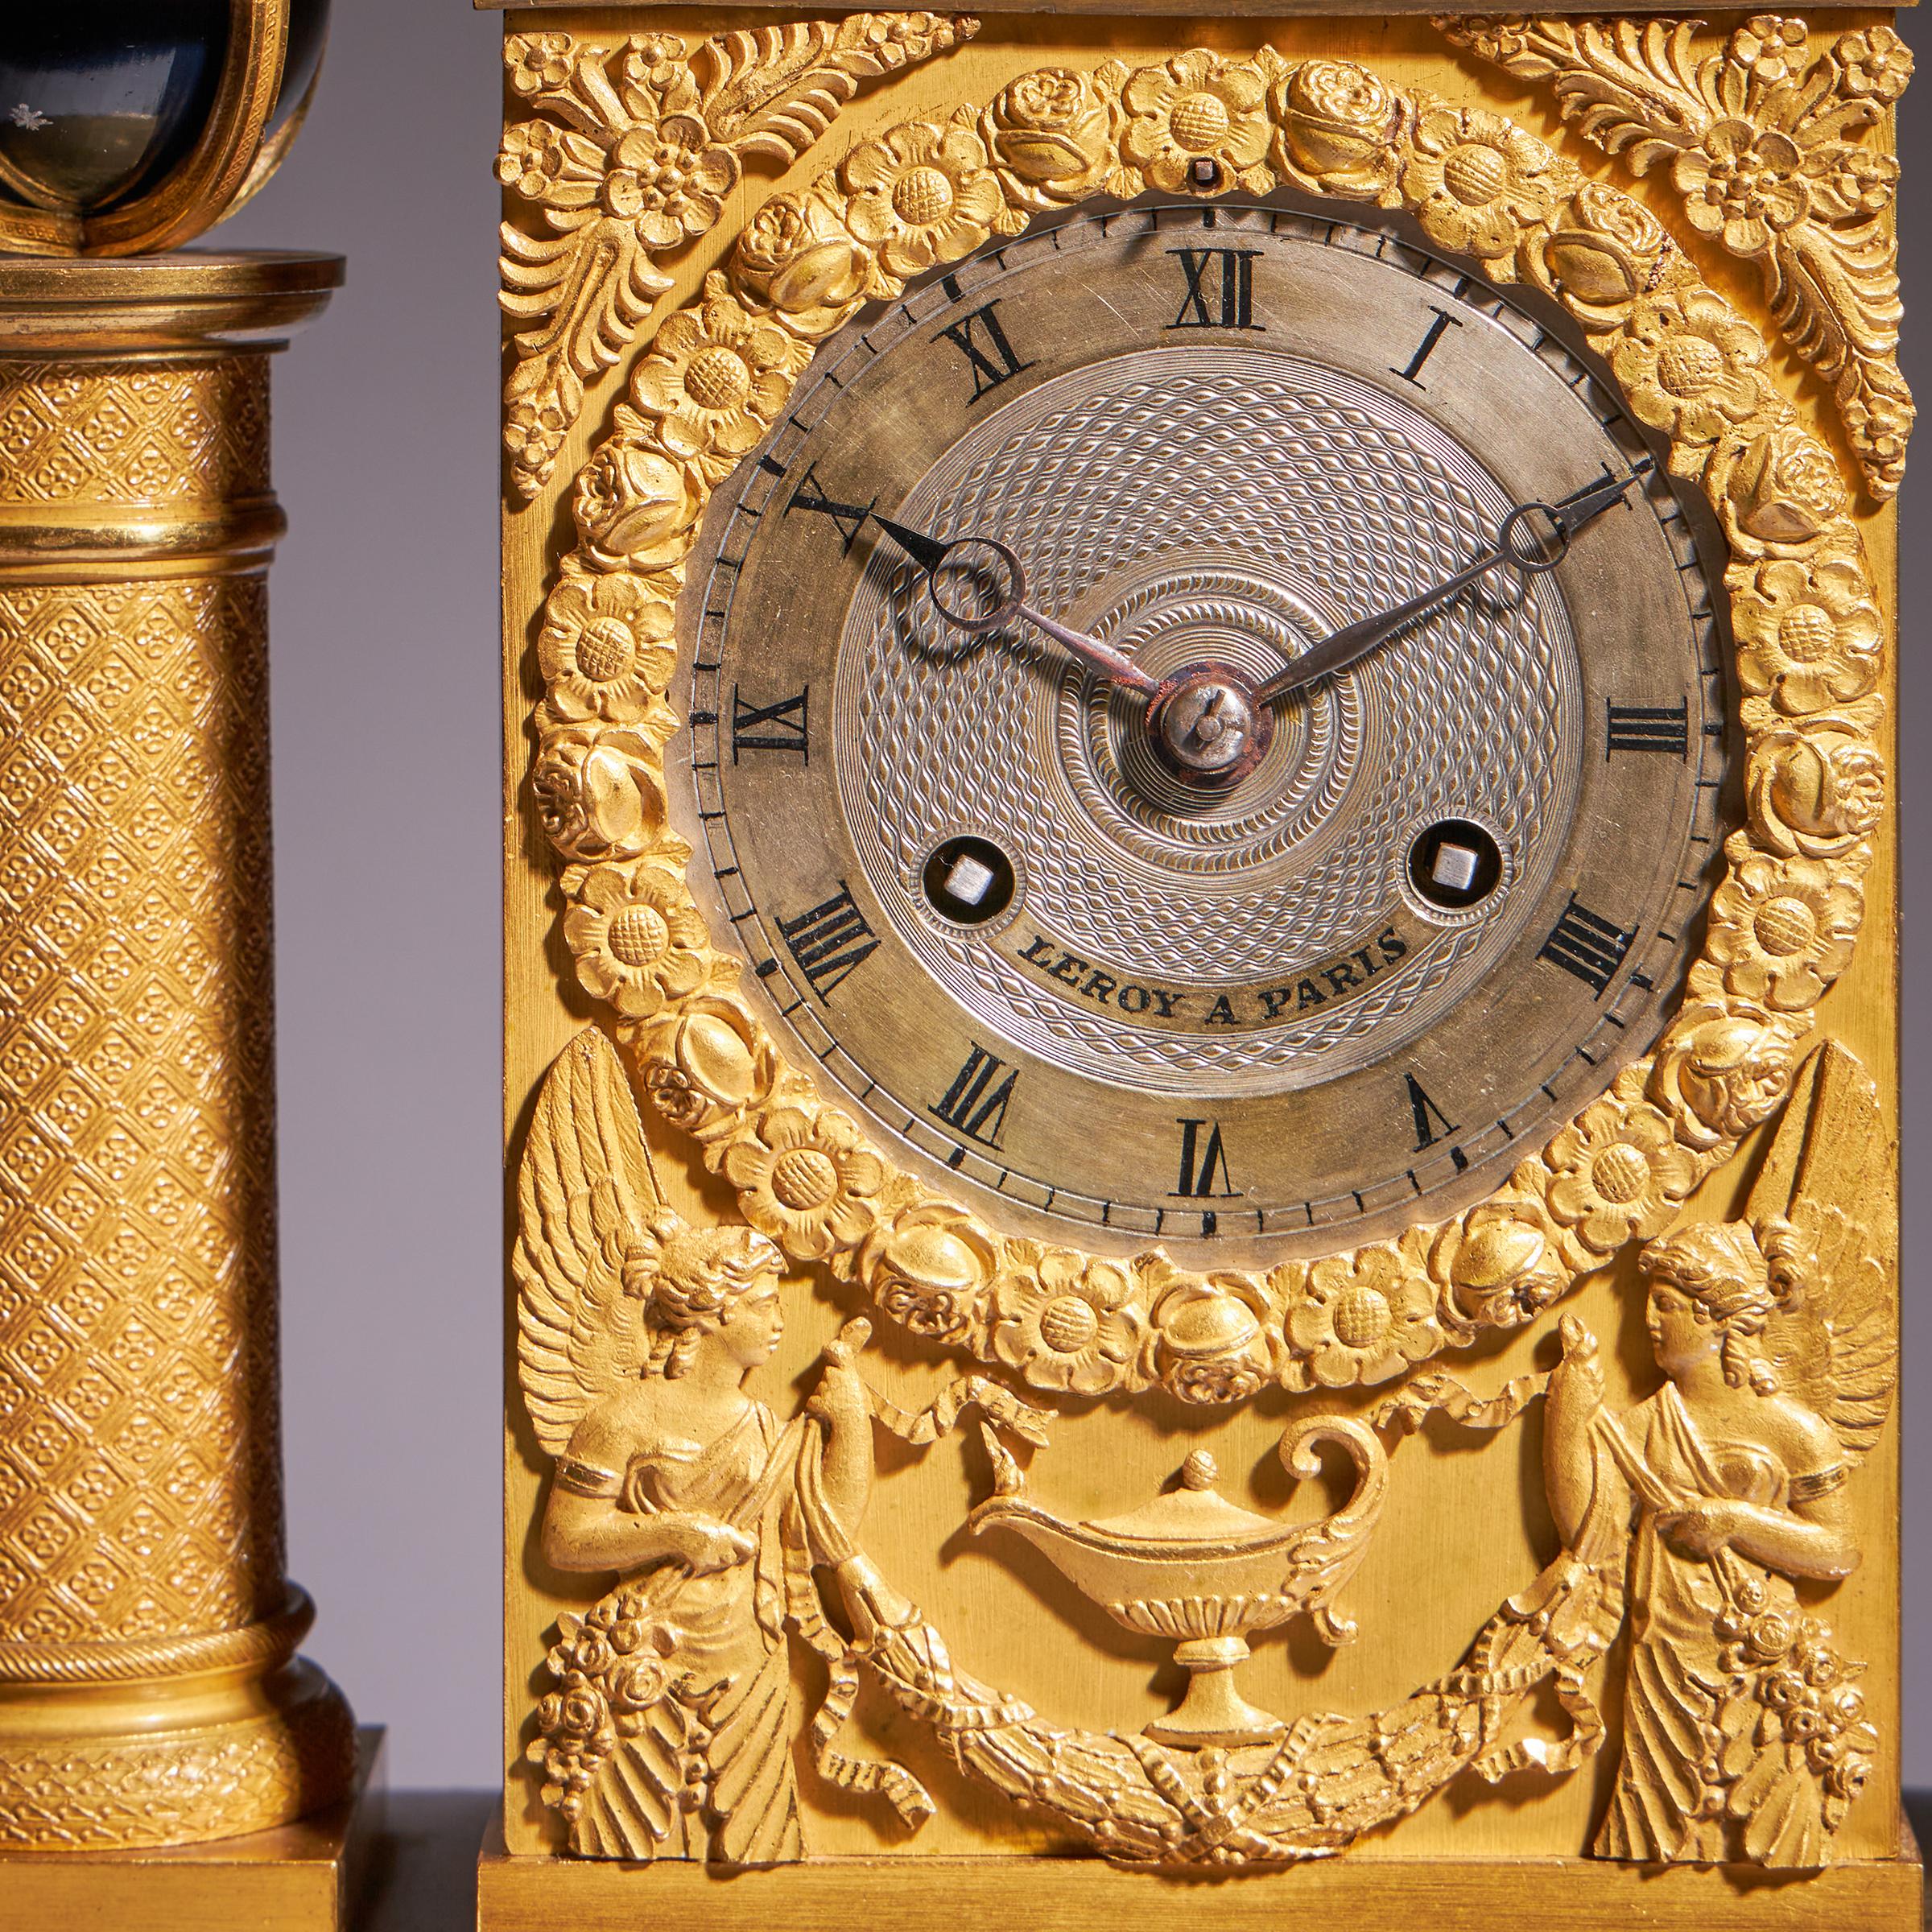 Fine 19th-century French ormolu mantel clock (pendule) by Leroy a Paris, c. 1825 6